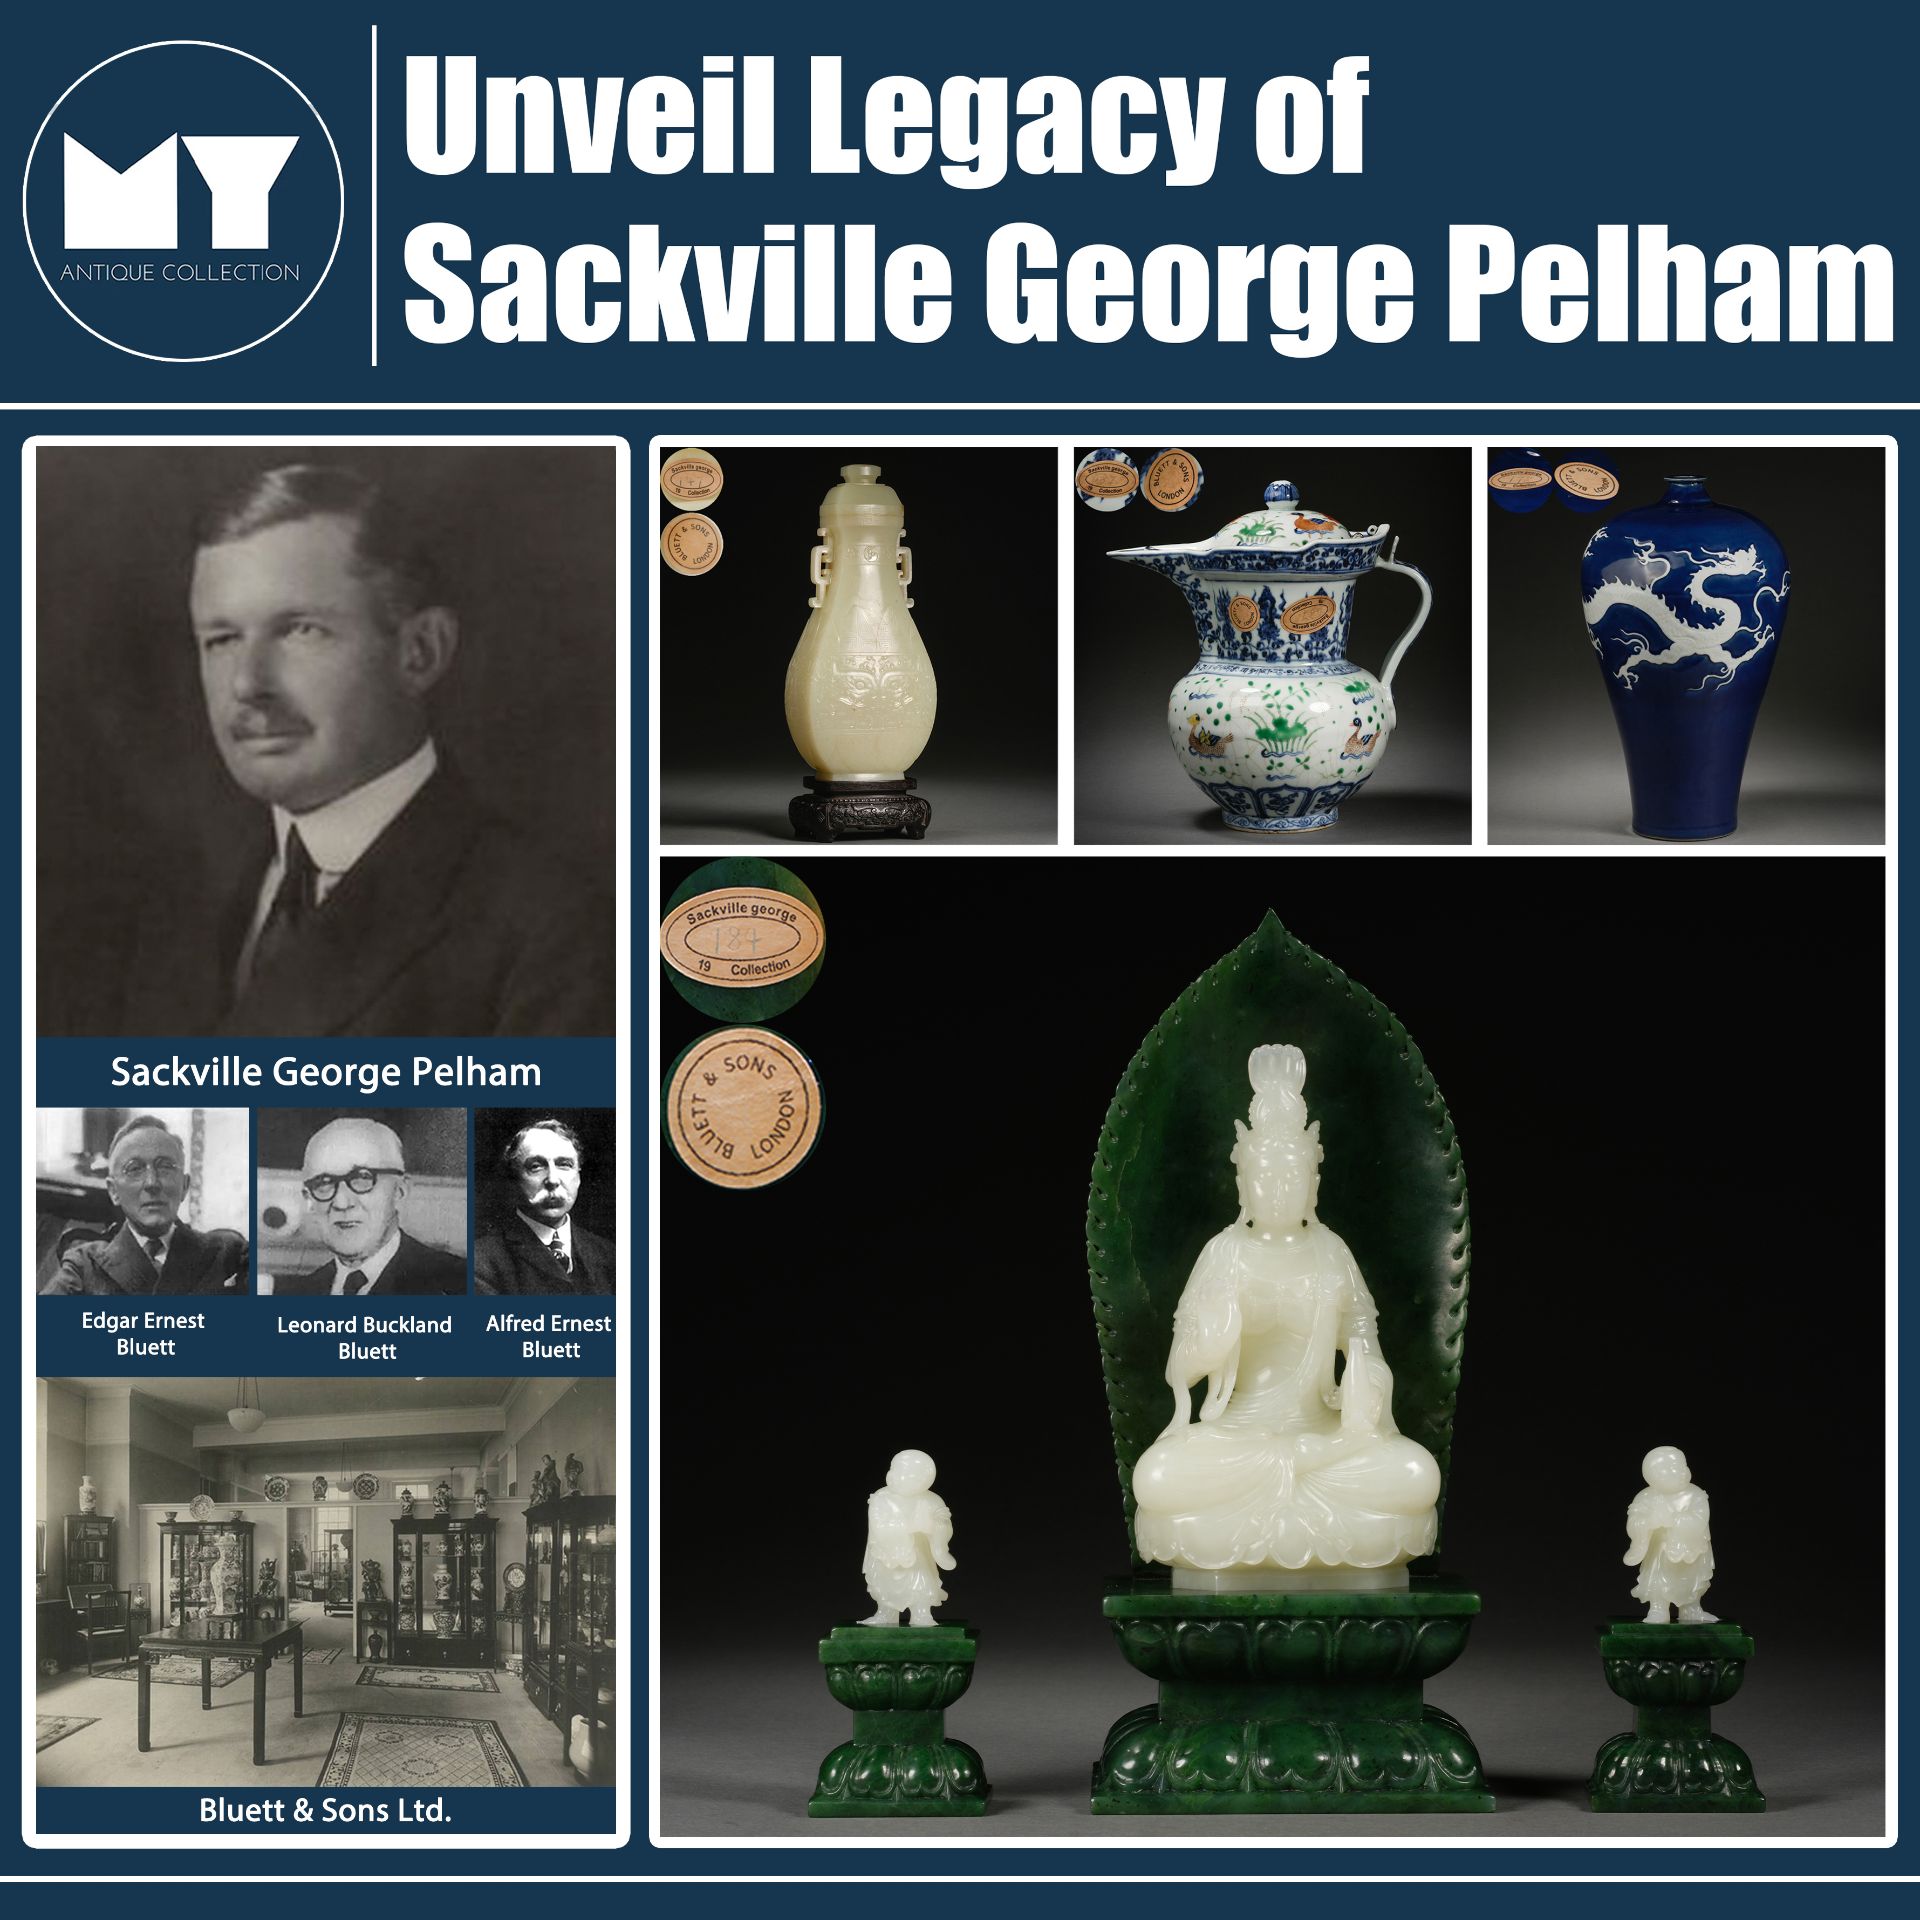 Unveil Legacy of Sackville George Pelham